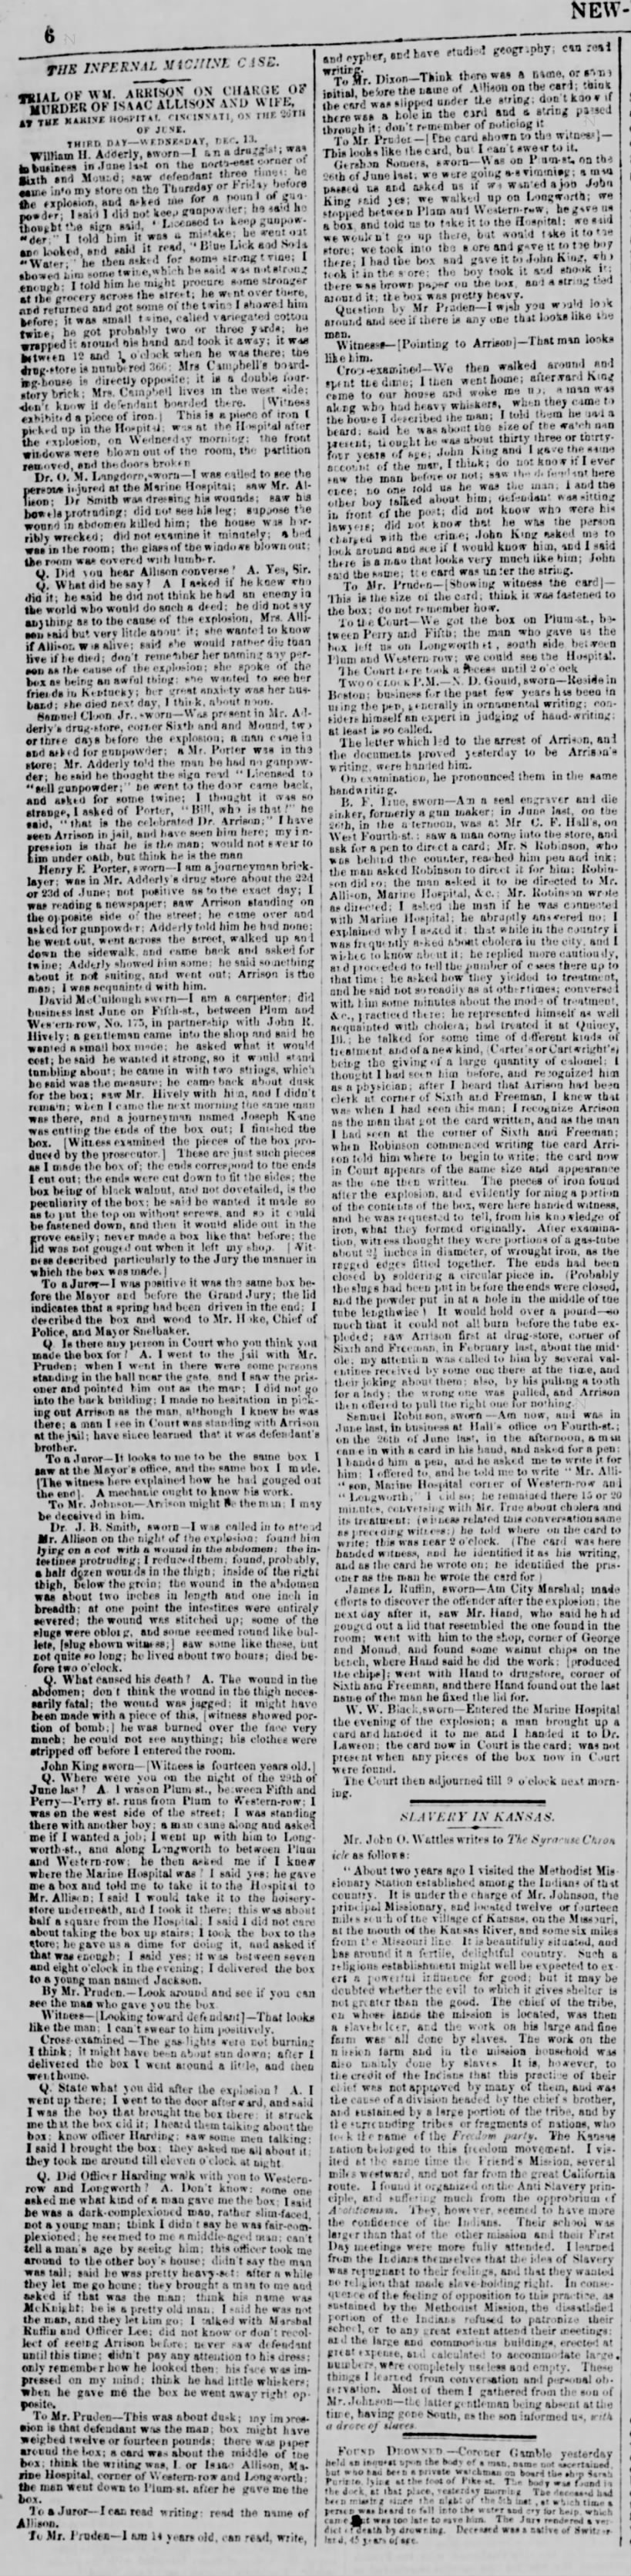 New York Tribune 16 Dec 1854
The Infernal Machine Case